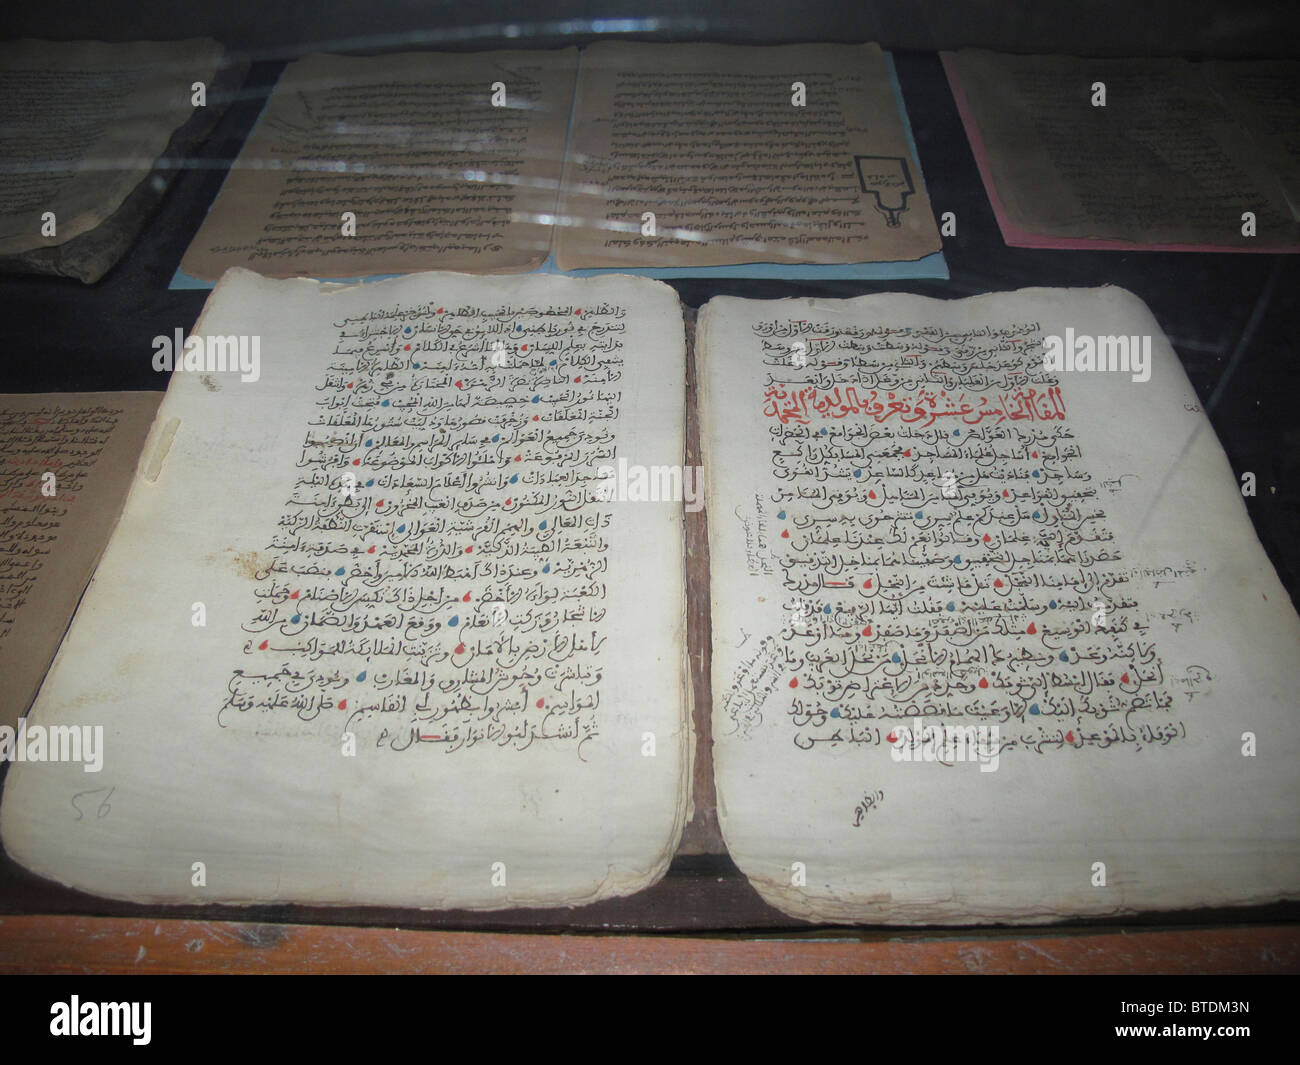 An ancient Arabic manuscript on display Stock Photo